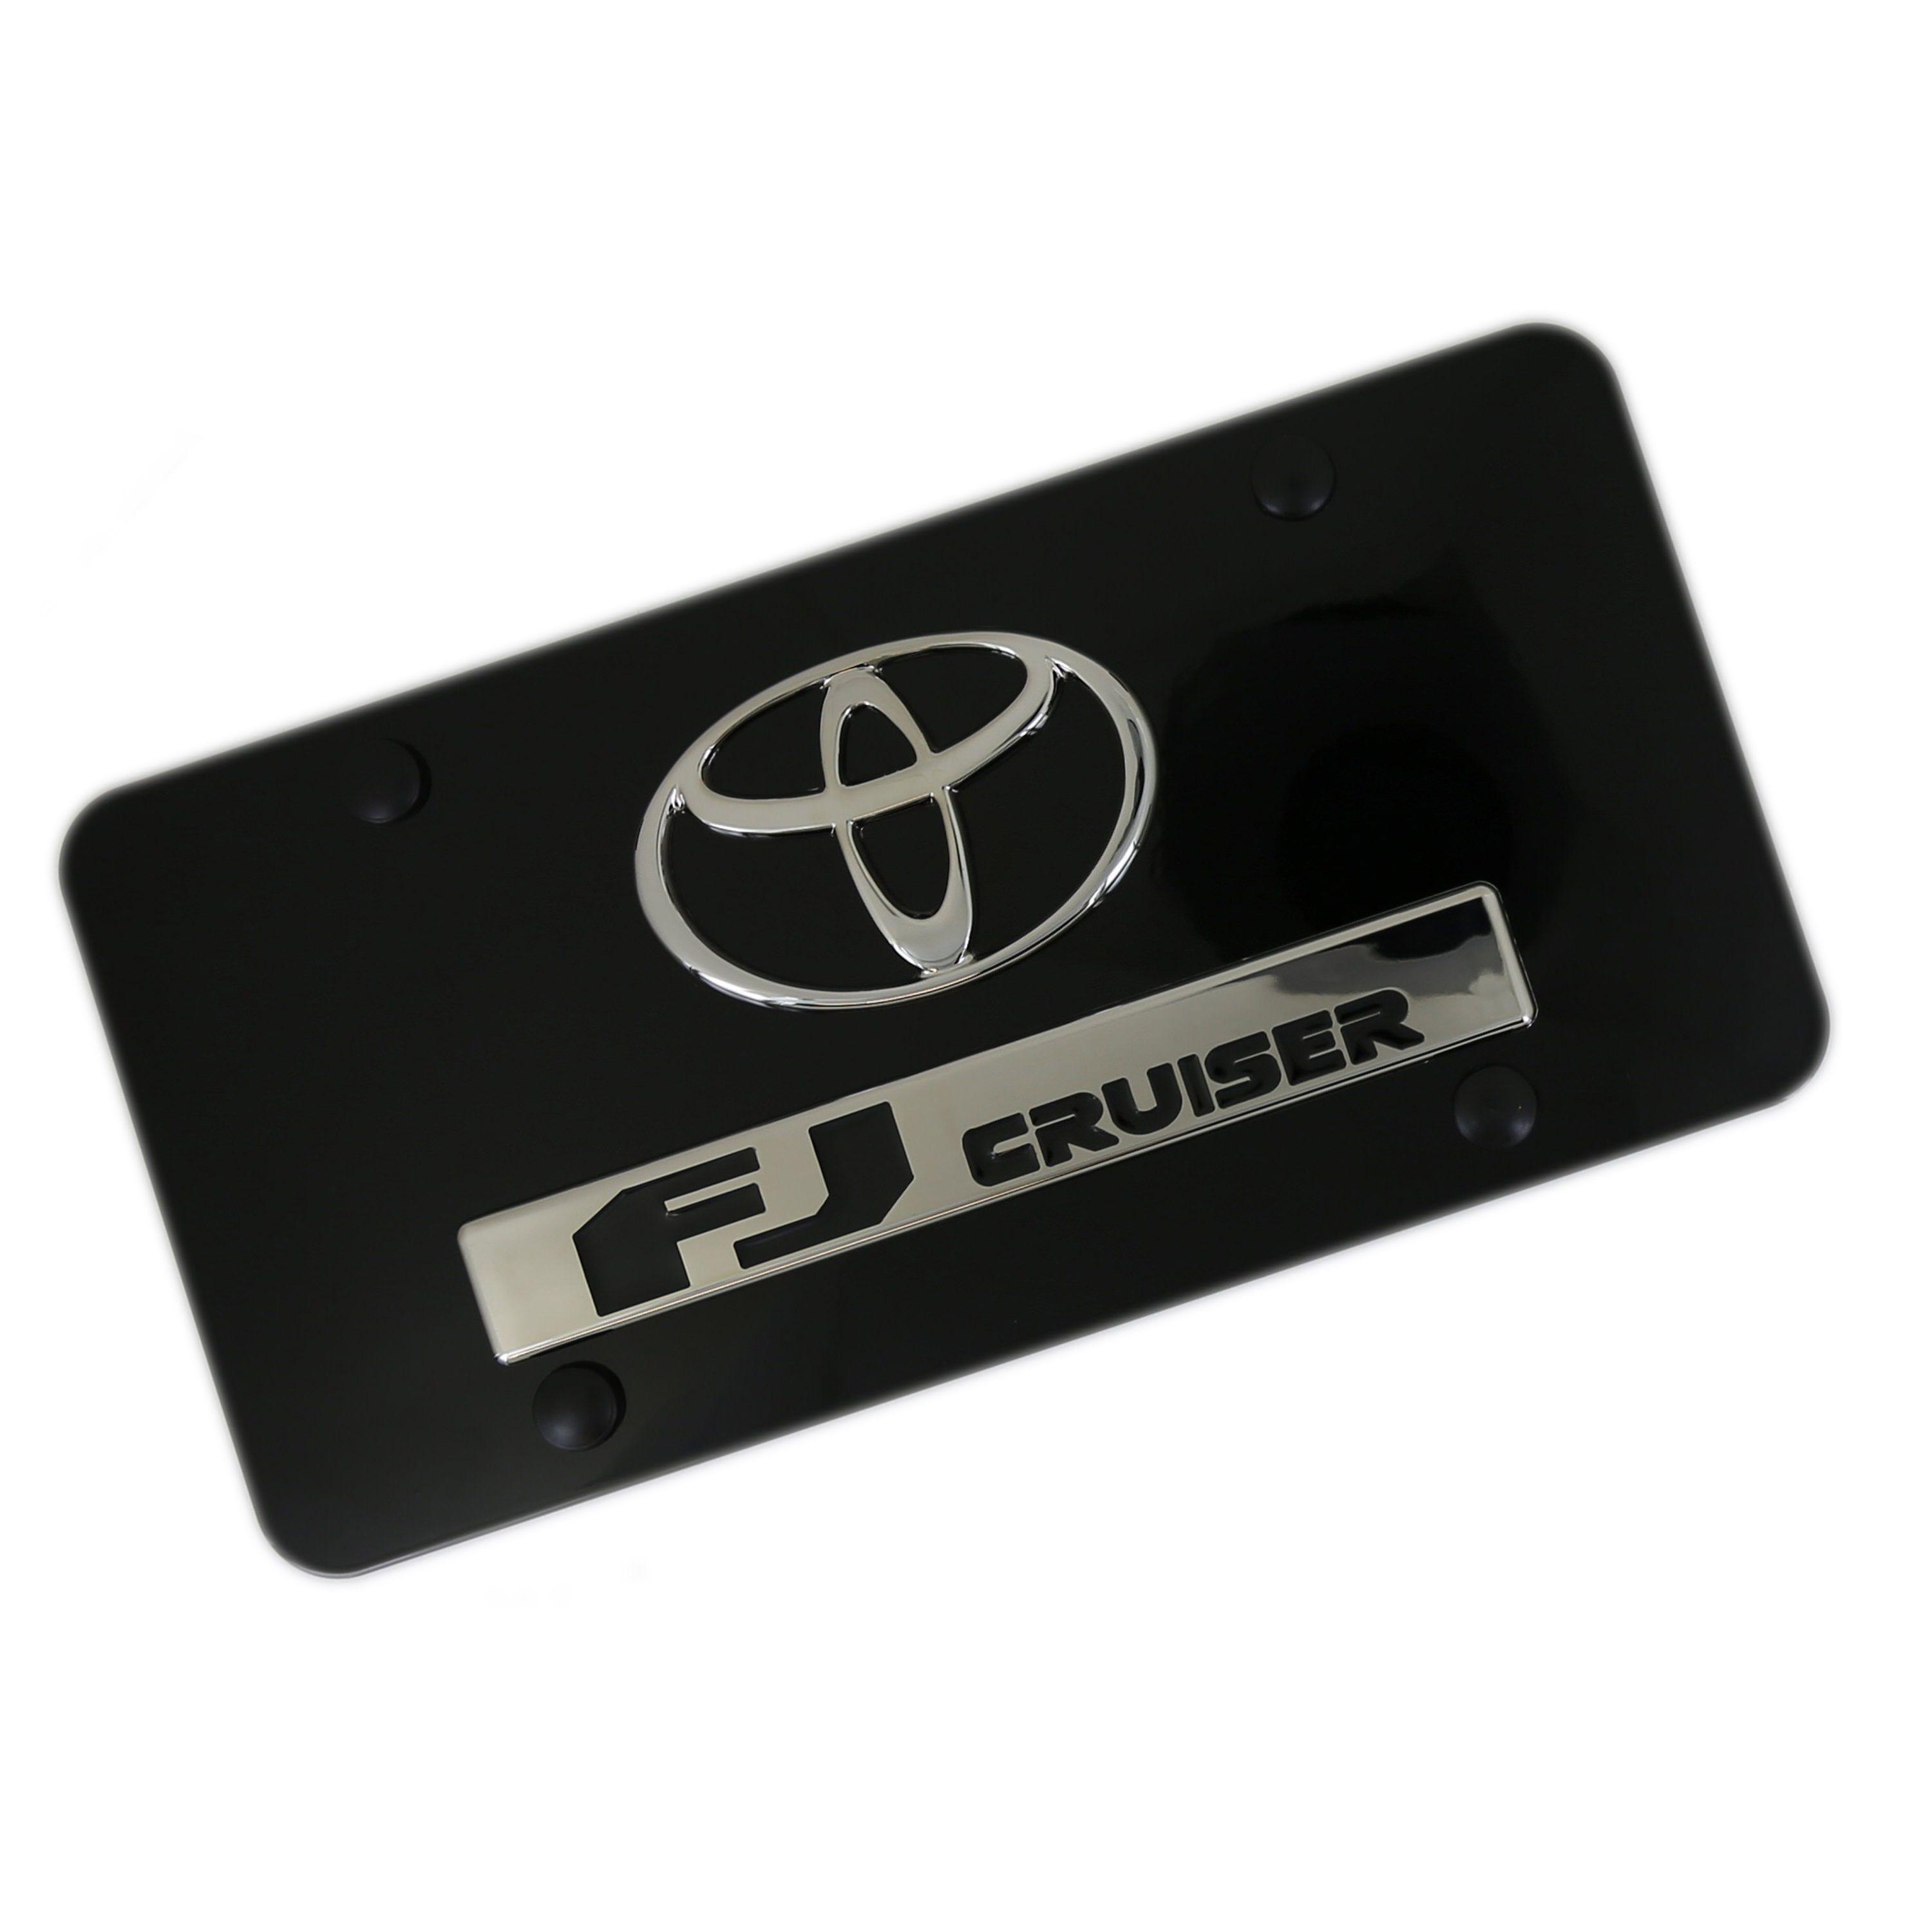 Cruiser Logo - Details about Toyota Logo + FJ Cruiser Name Badge On Black License Plate